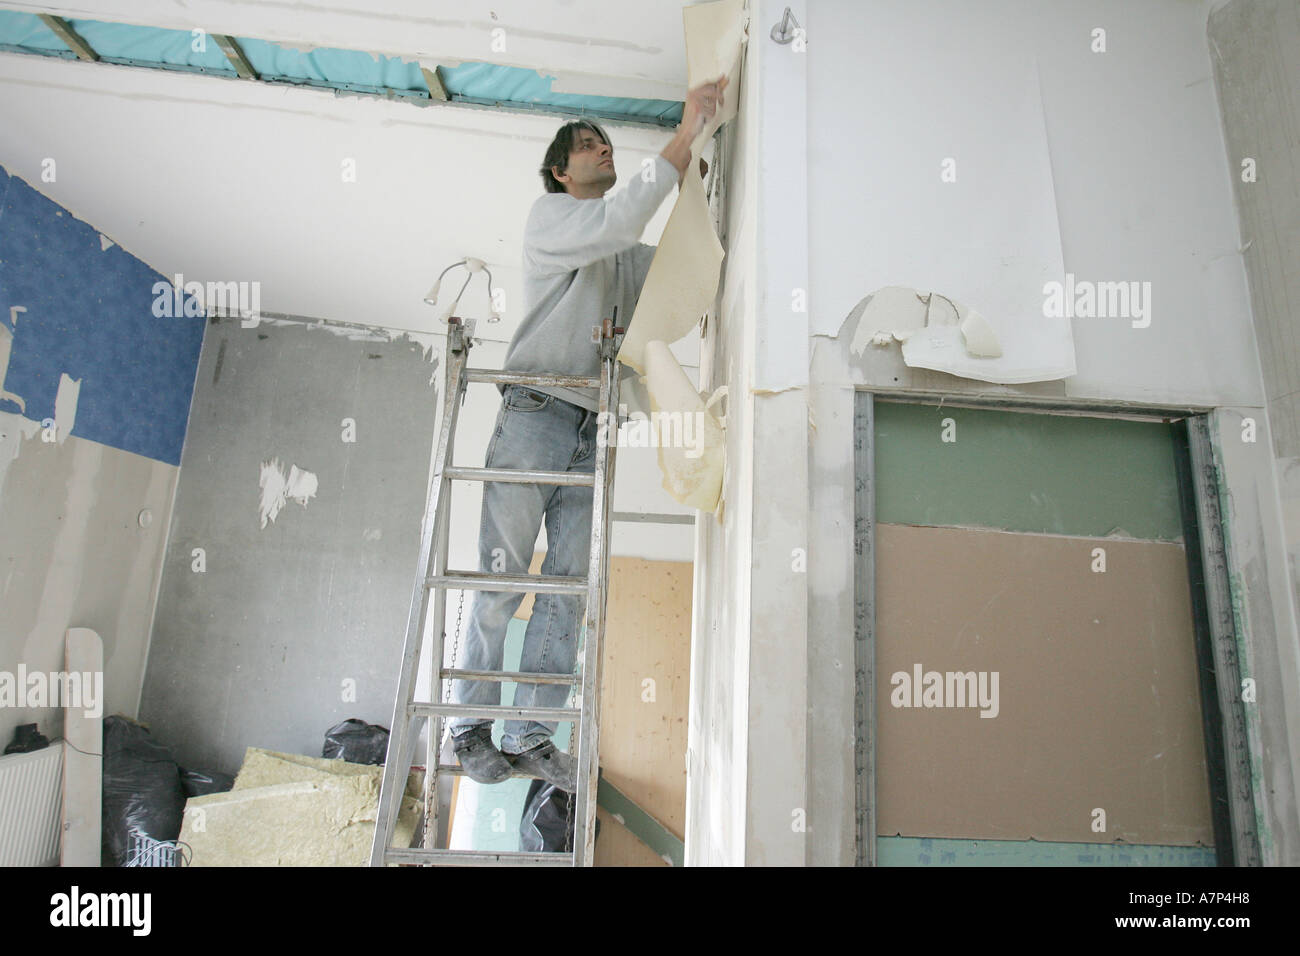 DEU, Germany, handyman renovating, high accident risk for handyman Stock Photo